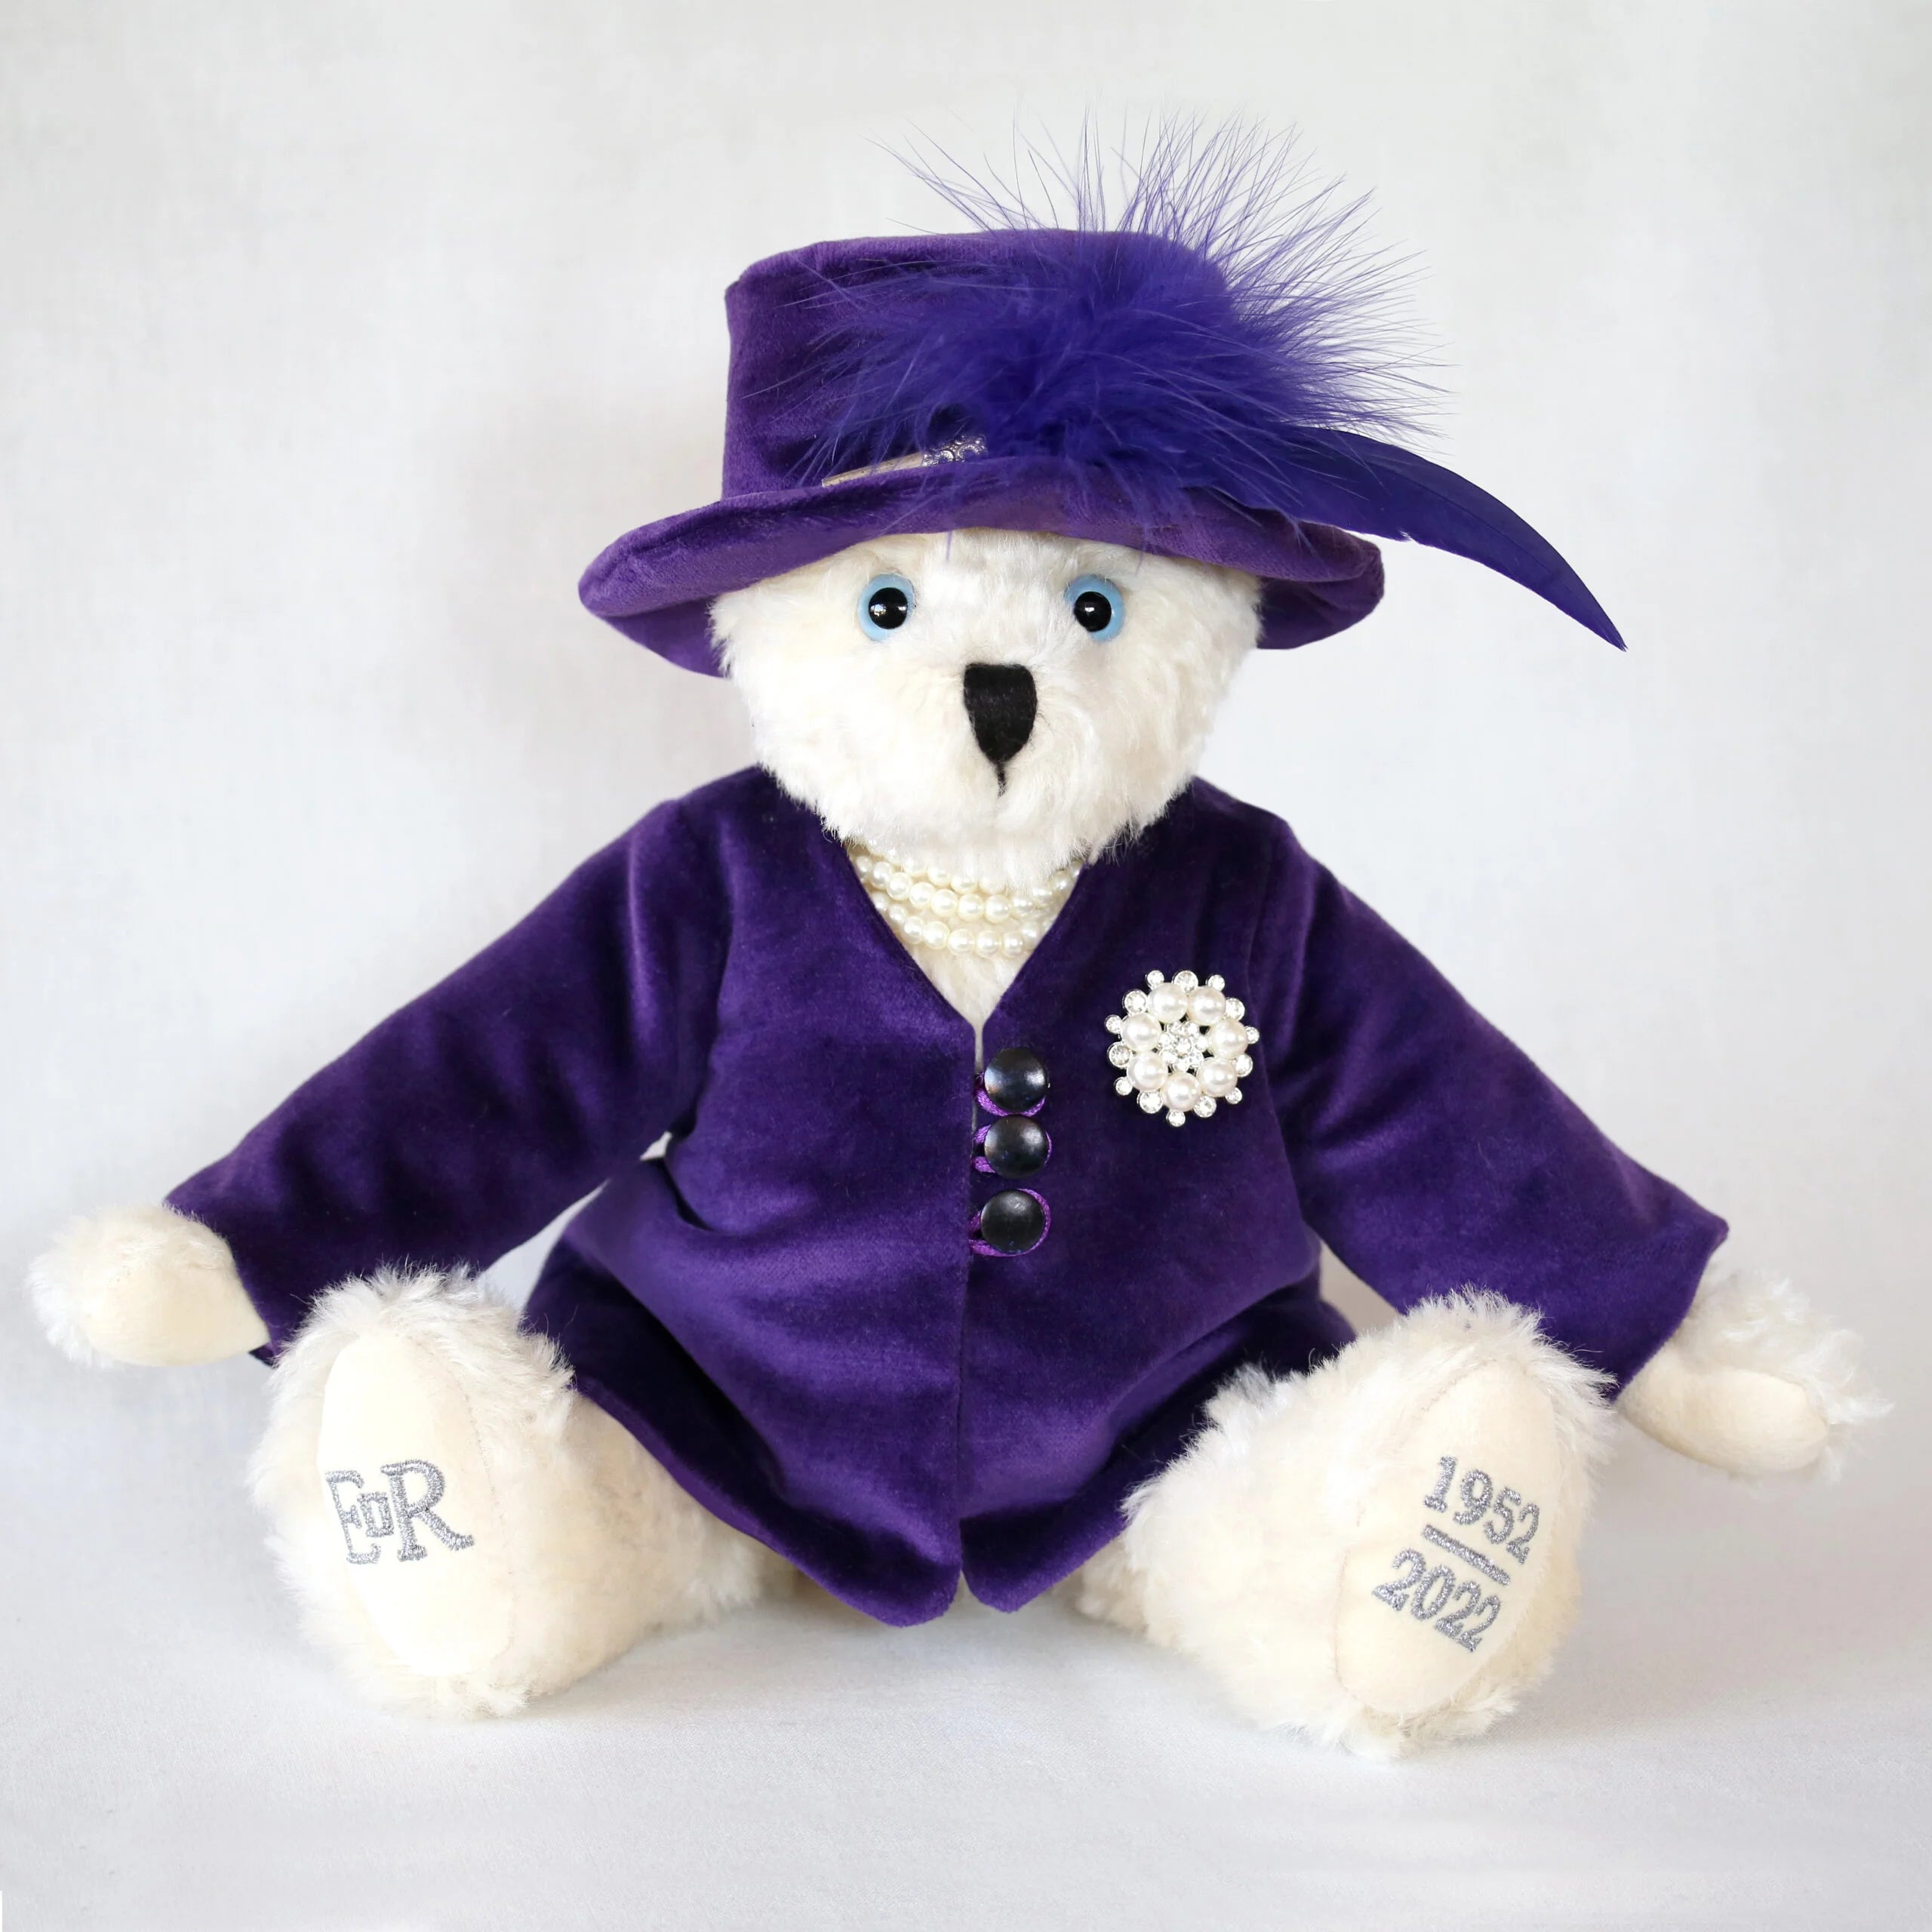 Queen Elizabeth II Platinum Jubilee Bear the Bear by Canterbury Bears